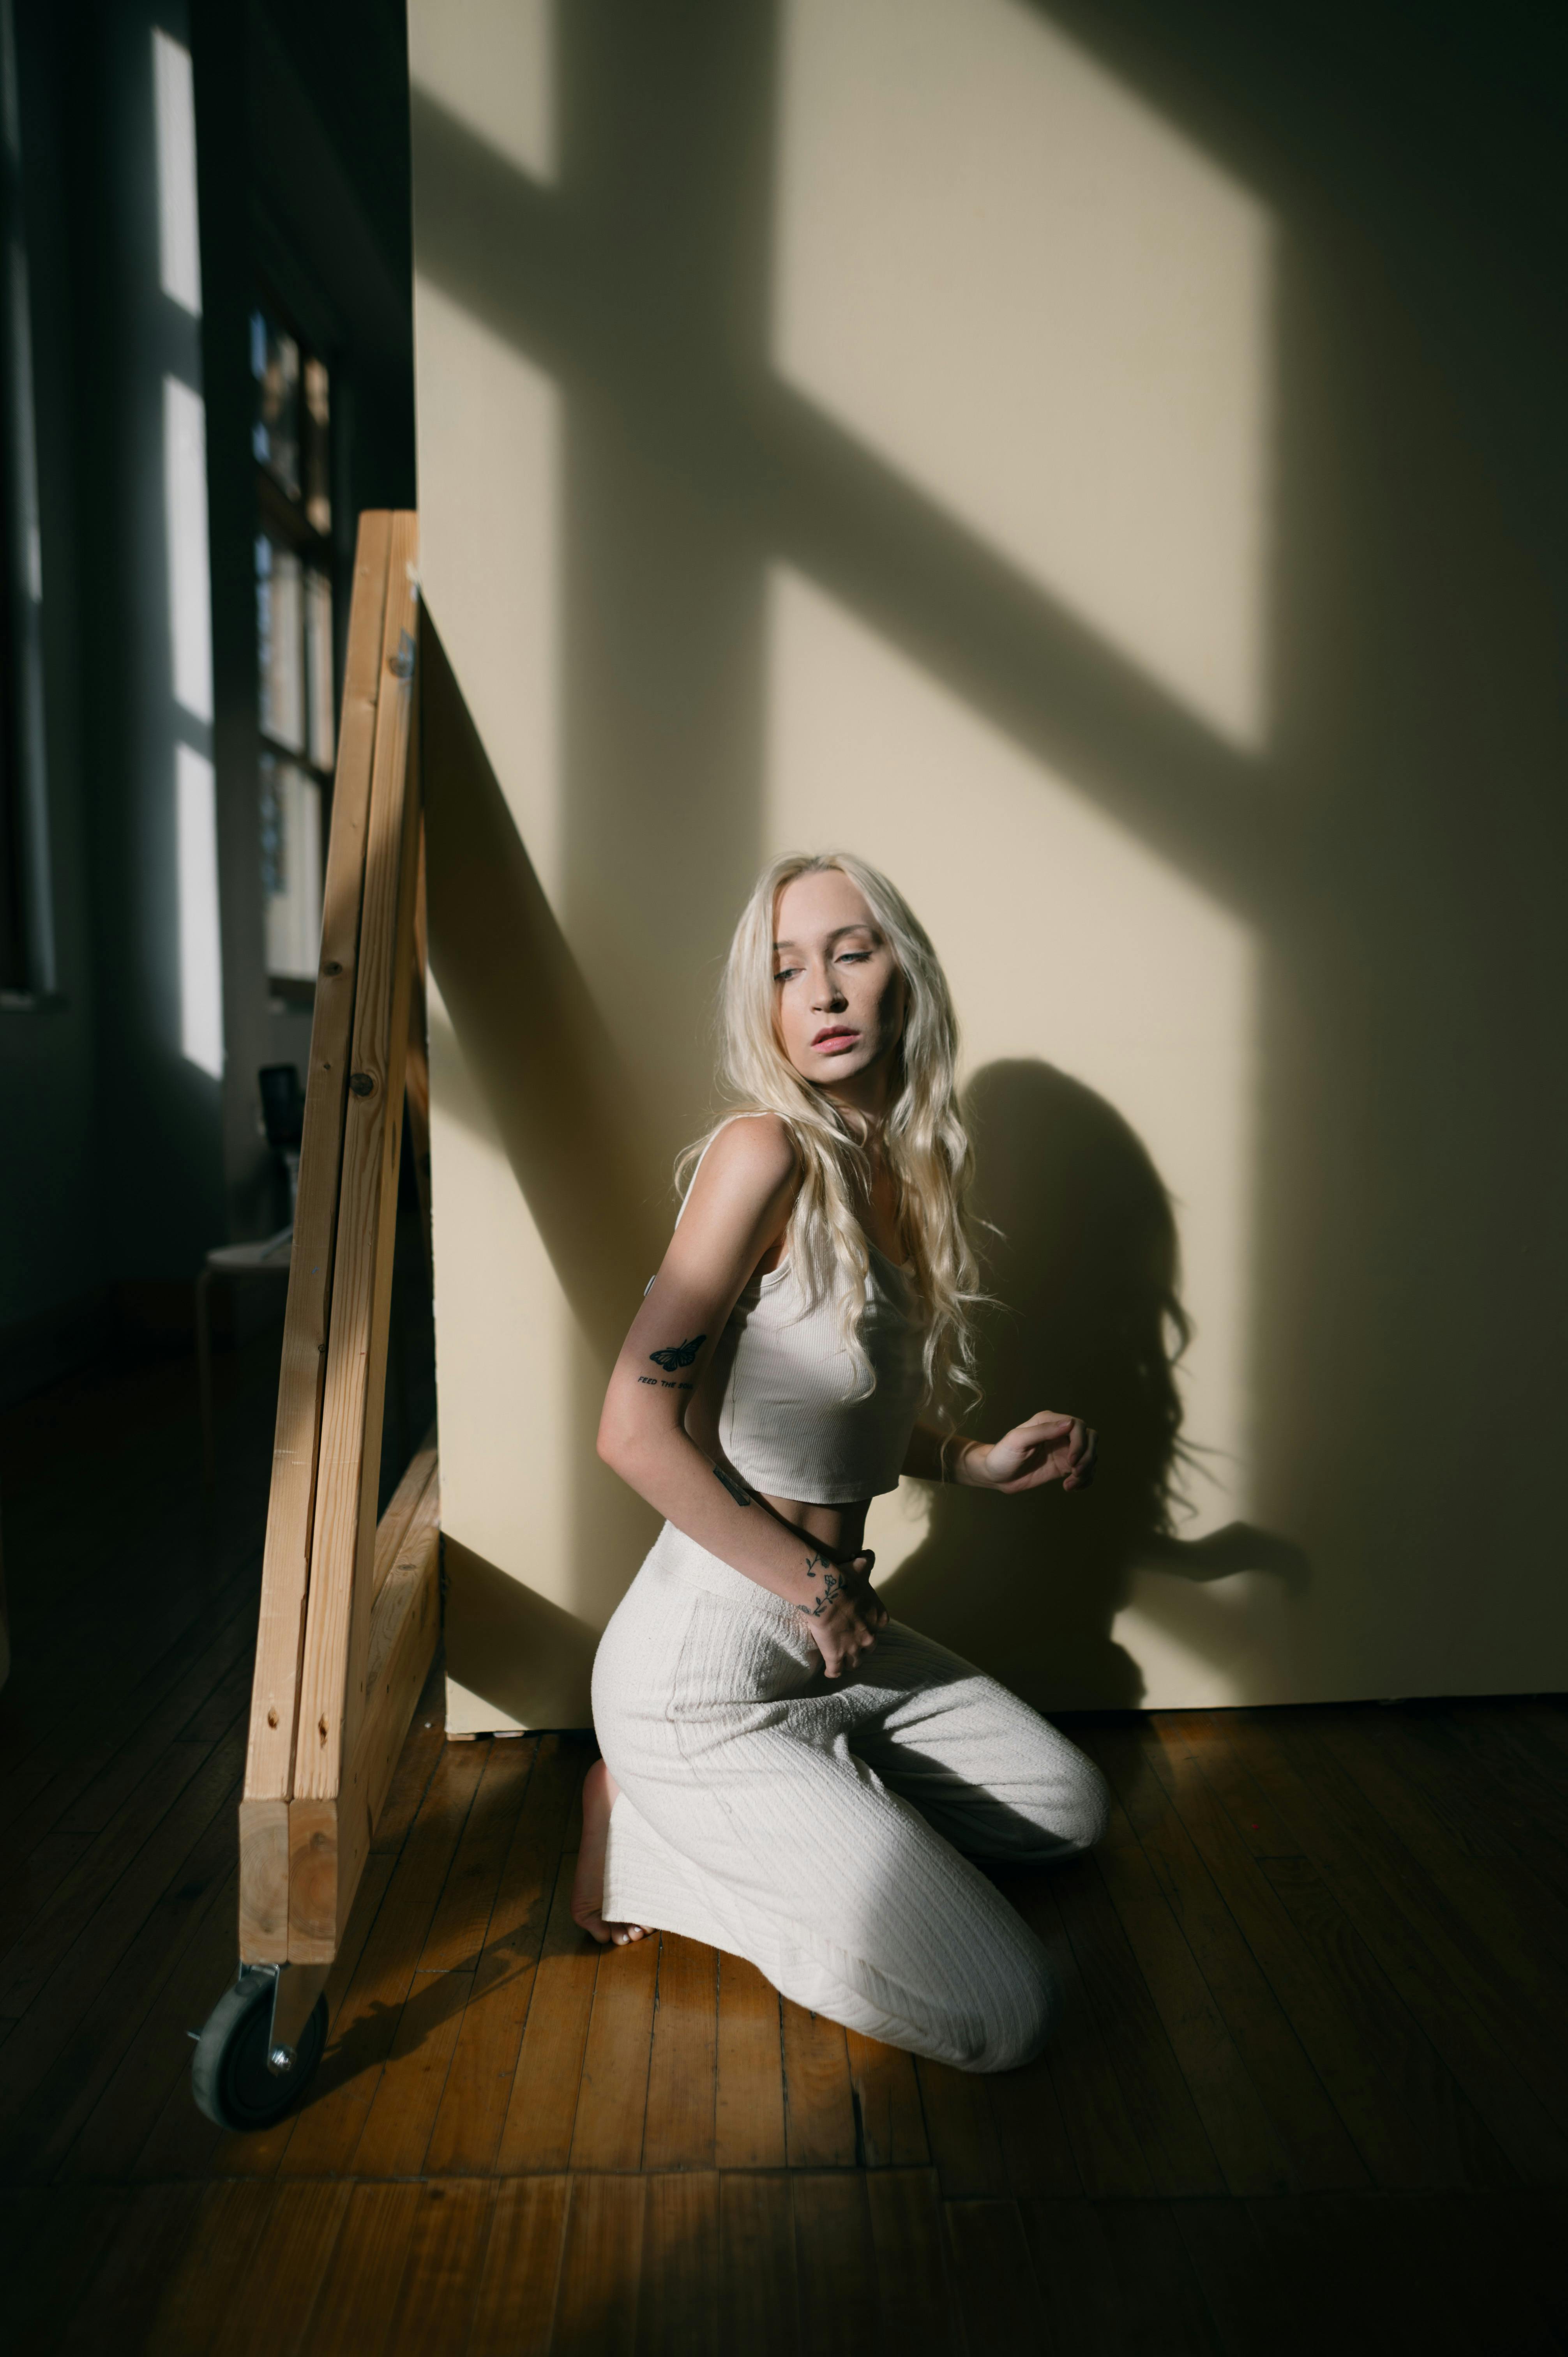 Download Blonde Woman With White Nicholas Kirkwood Flats Wallpaper